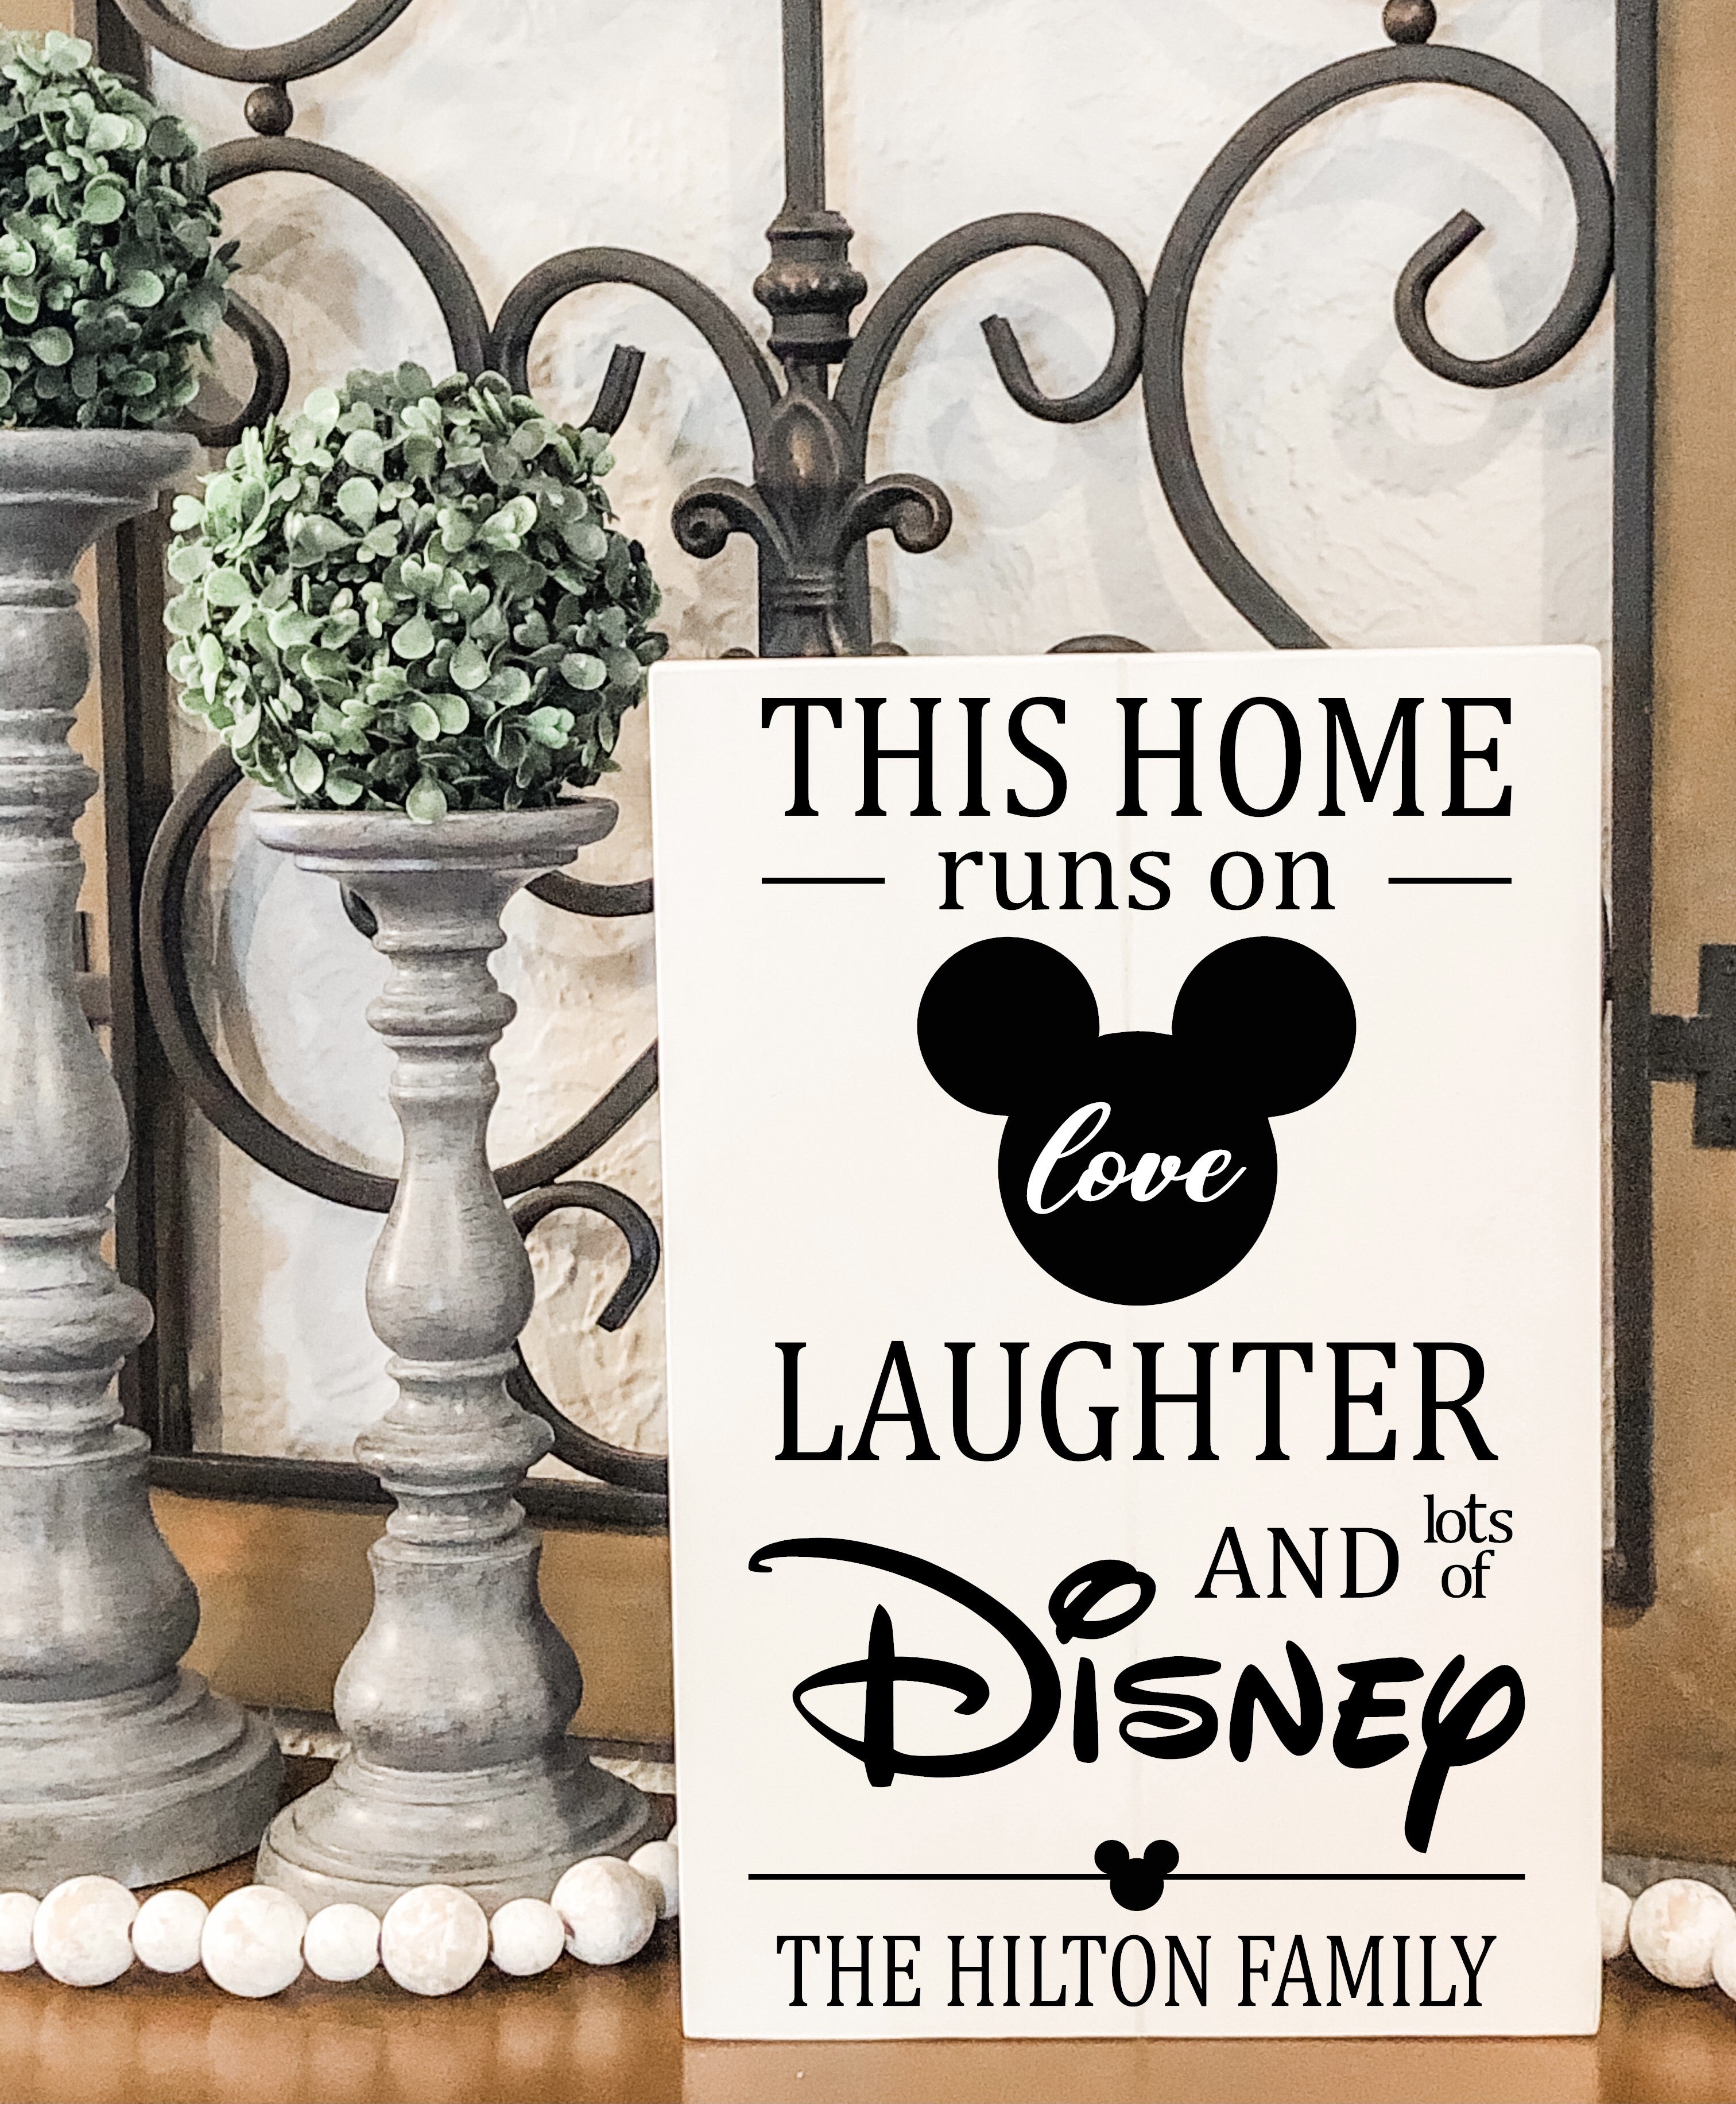 Love, Laughter, Disney